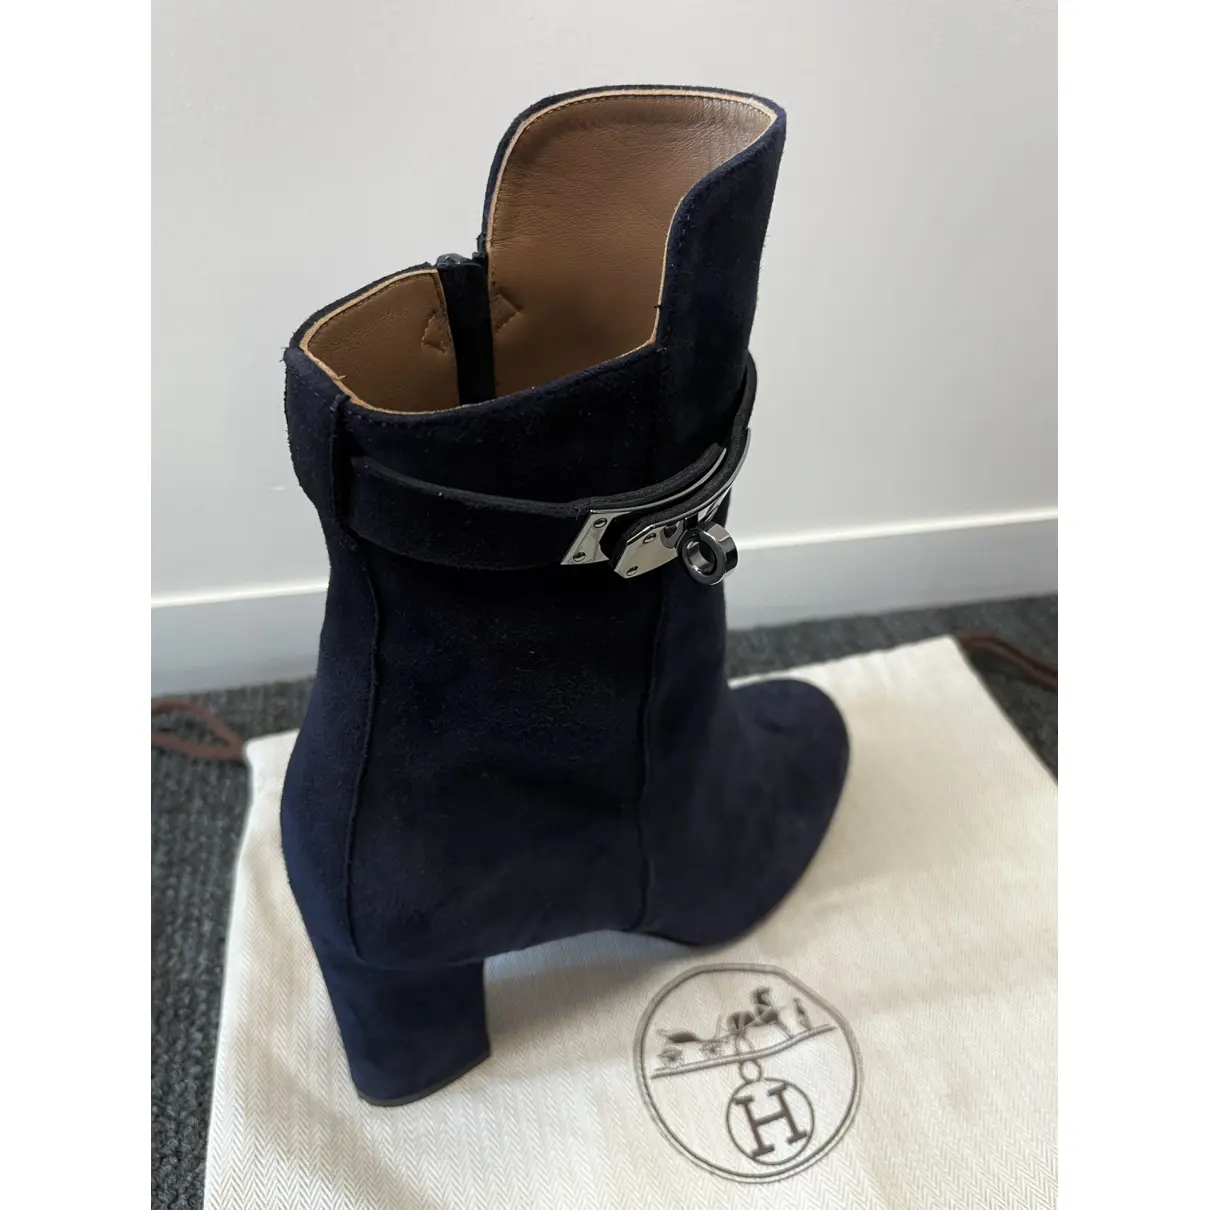 Saint Germain buckled boots Hermès